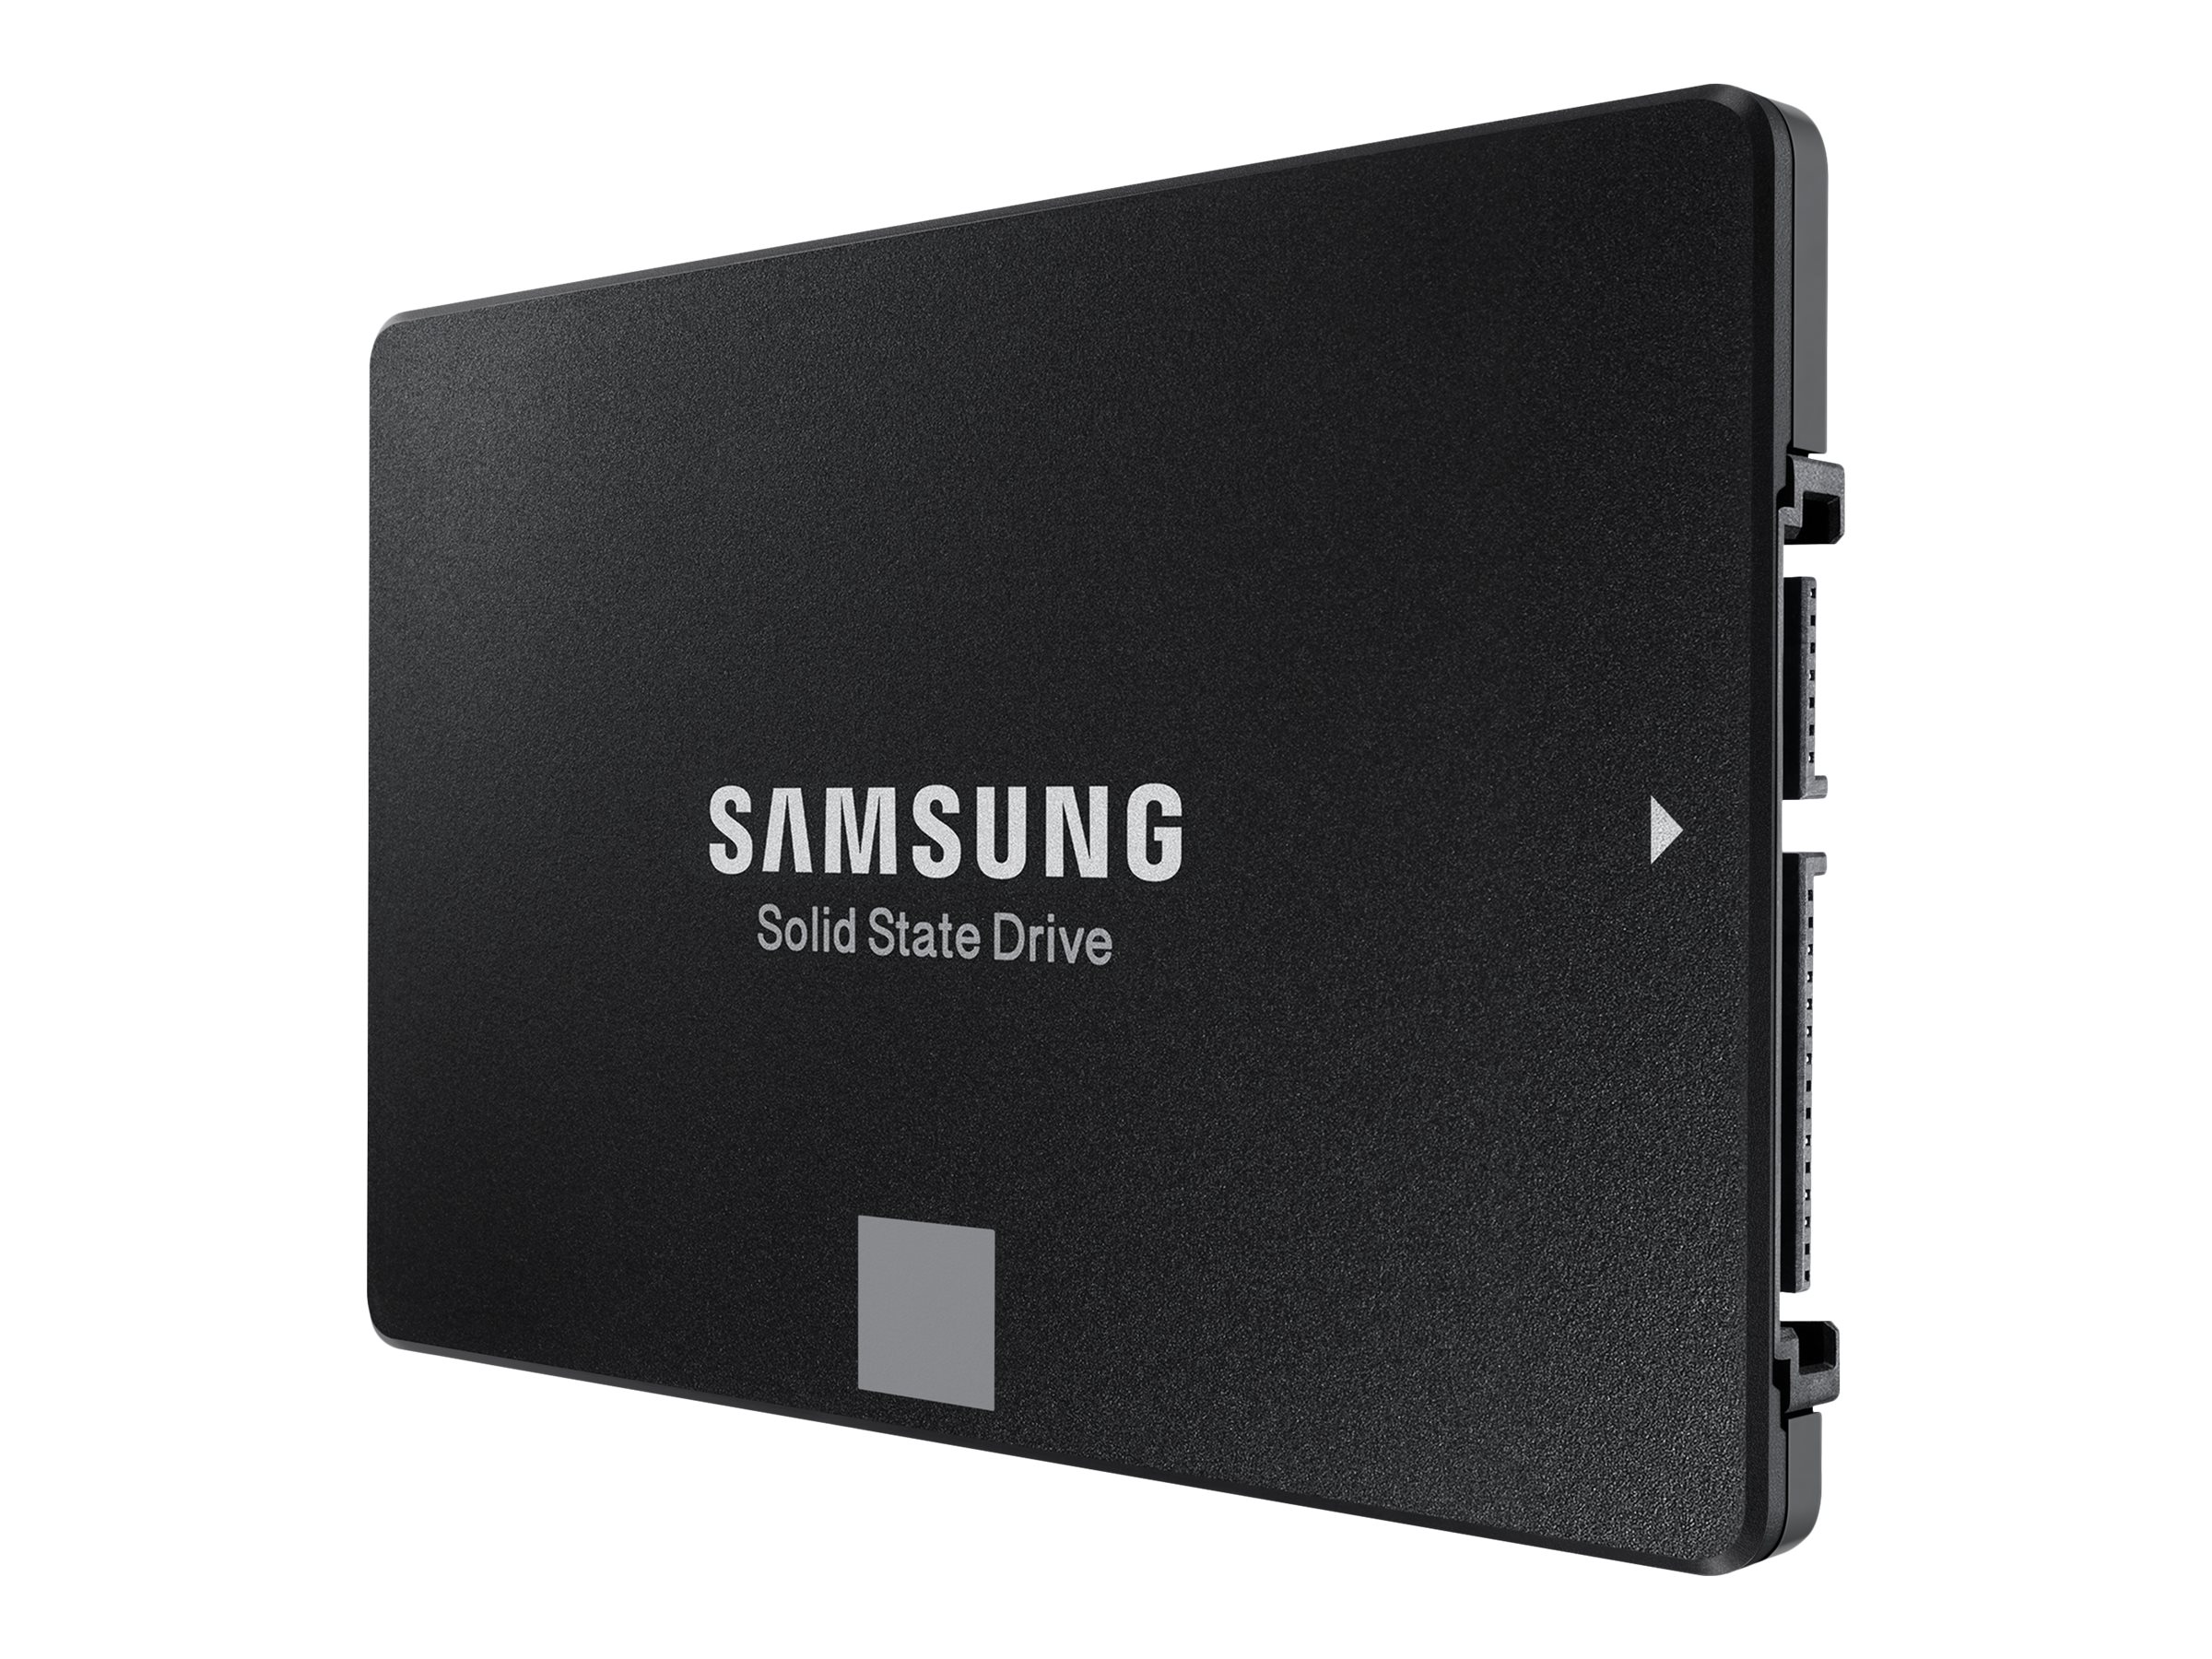 SAMSUNG 860 EVO-Series 2.5" SATA III Internal SSD Single Unit Version MZ-76E500B/AM 2019 - image 1 of 9